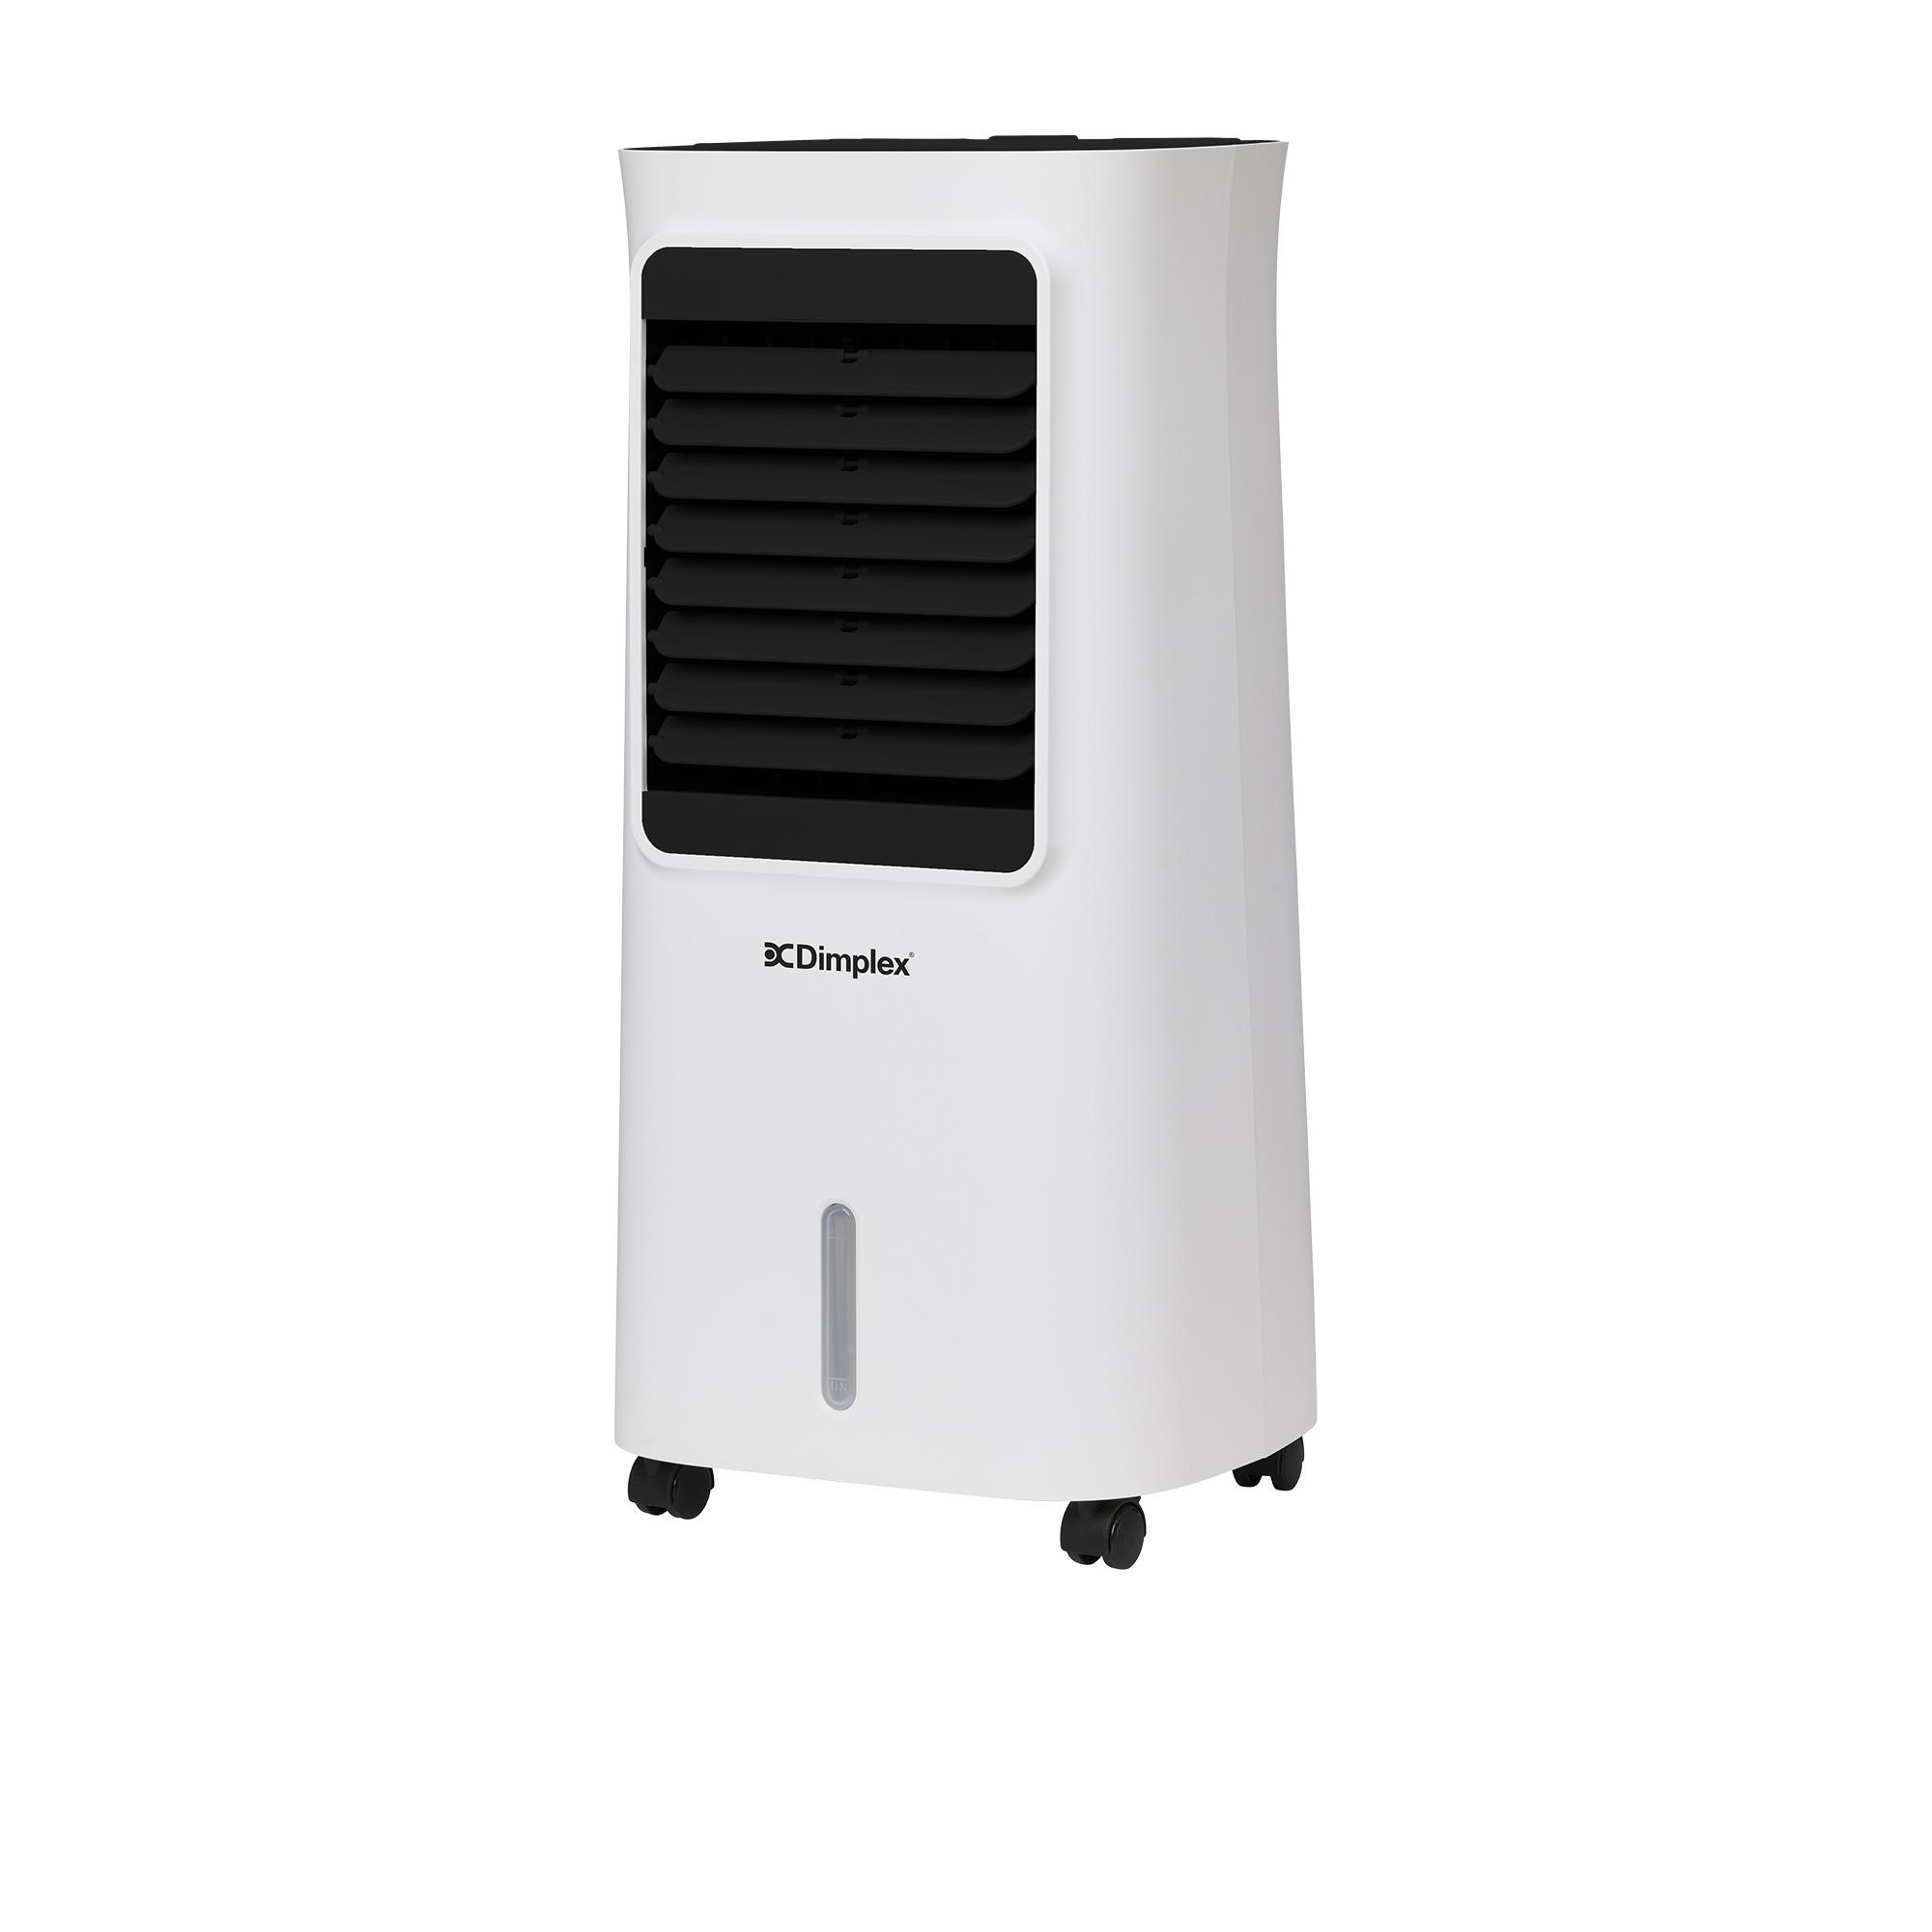 Dimplex Evaporative Cooler with Air Purifier Image 3